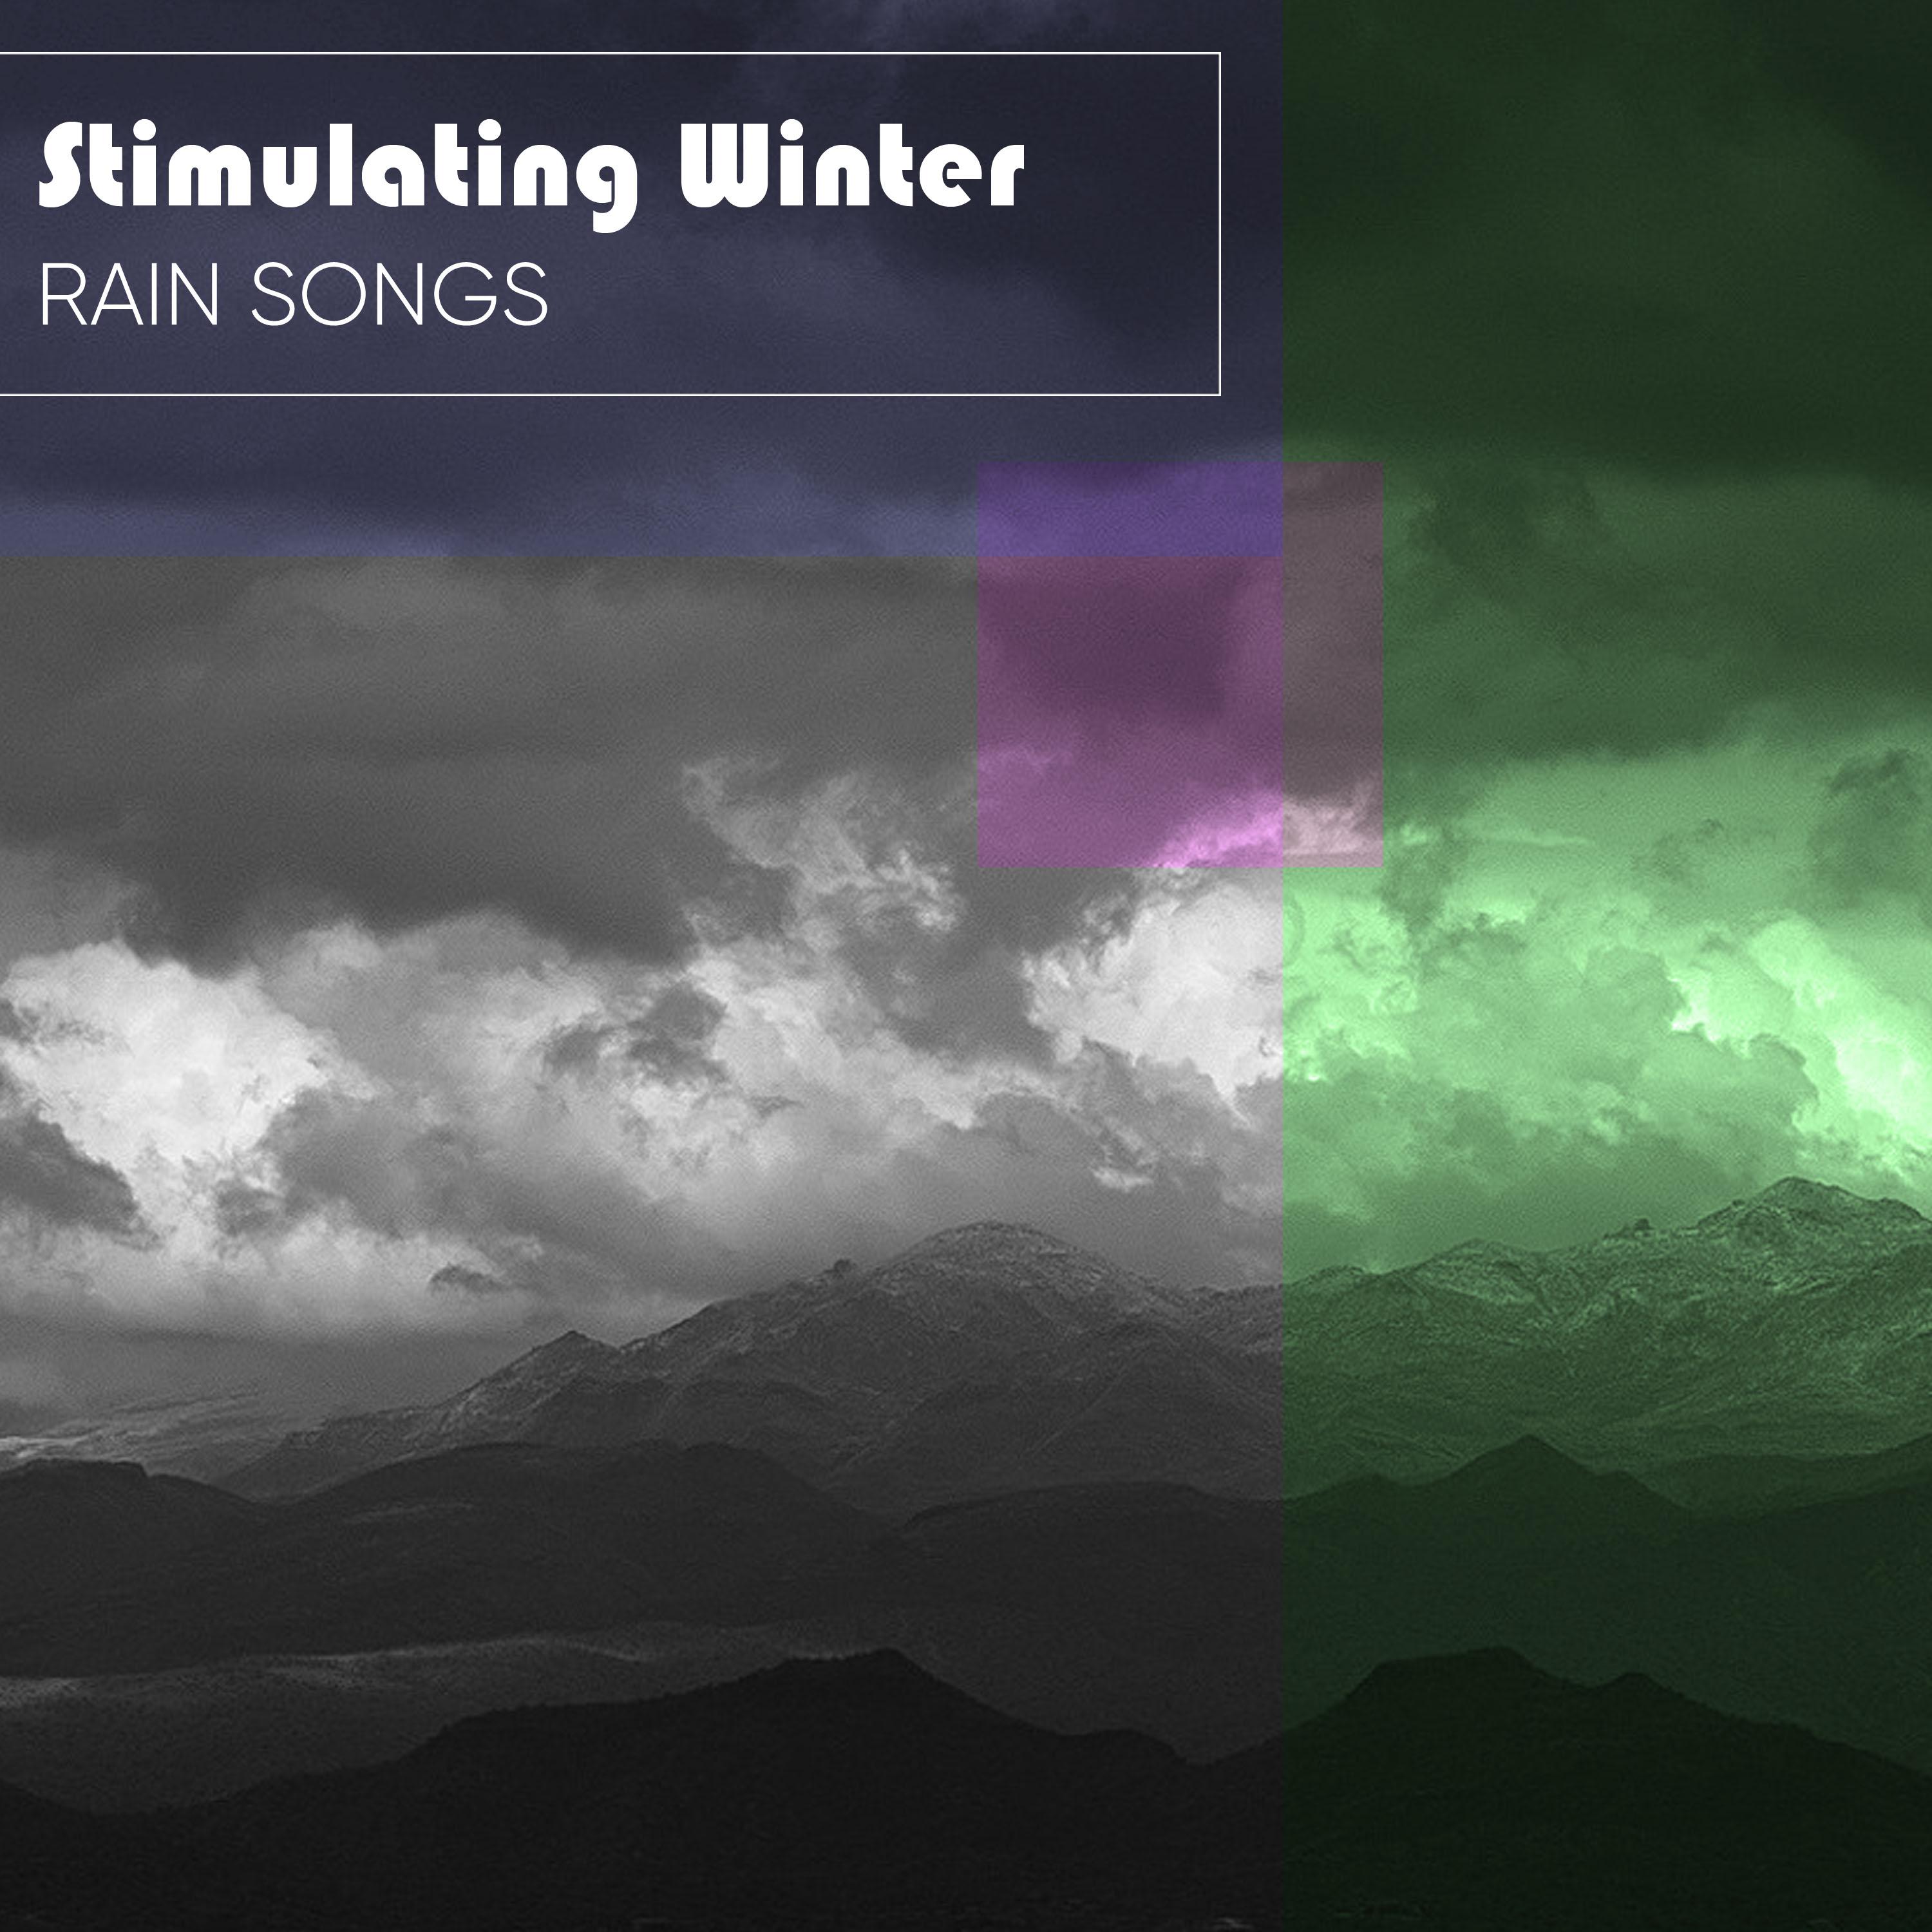 Stimulating Winter Rain Songs